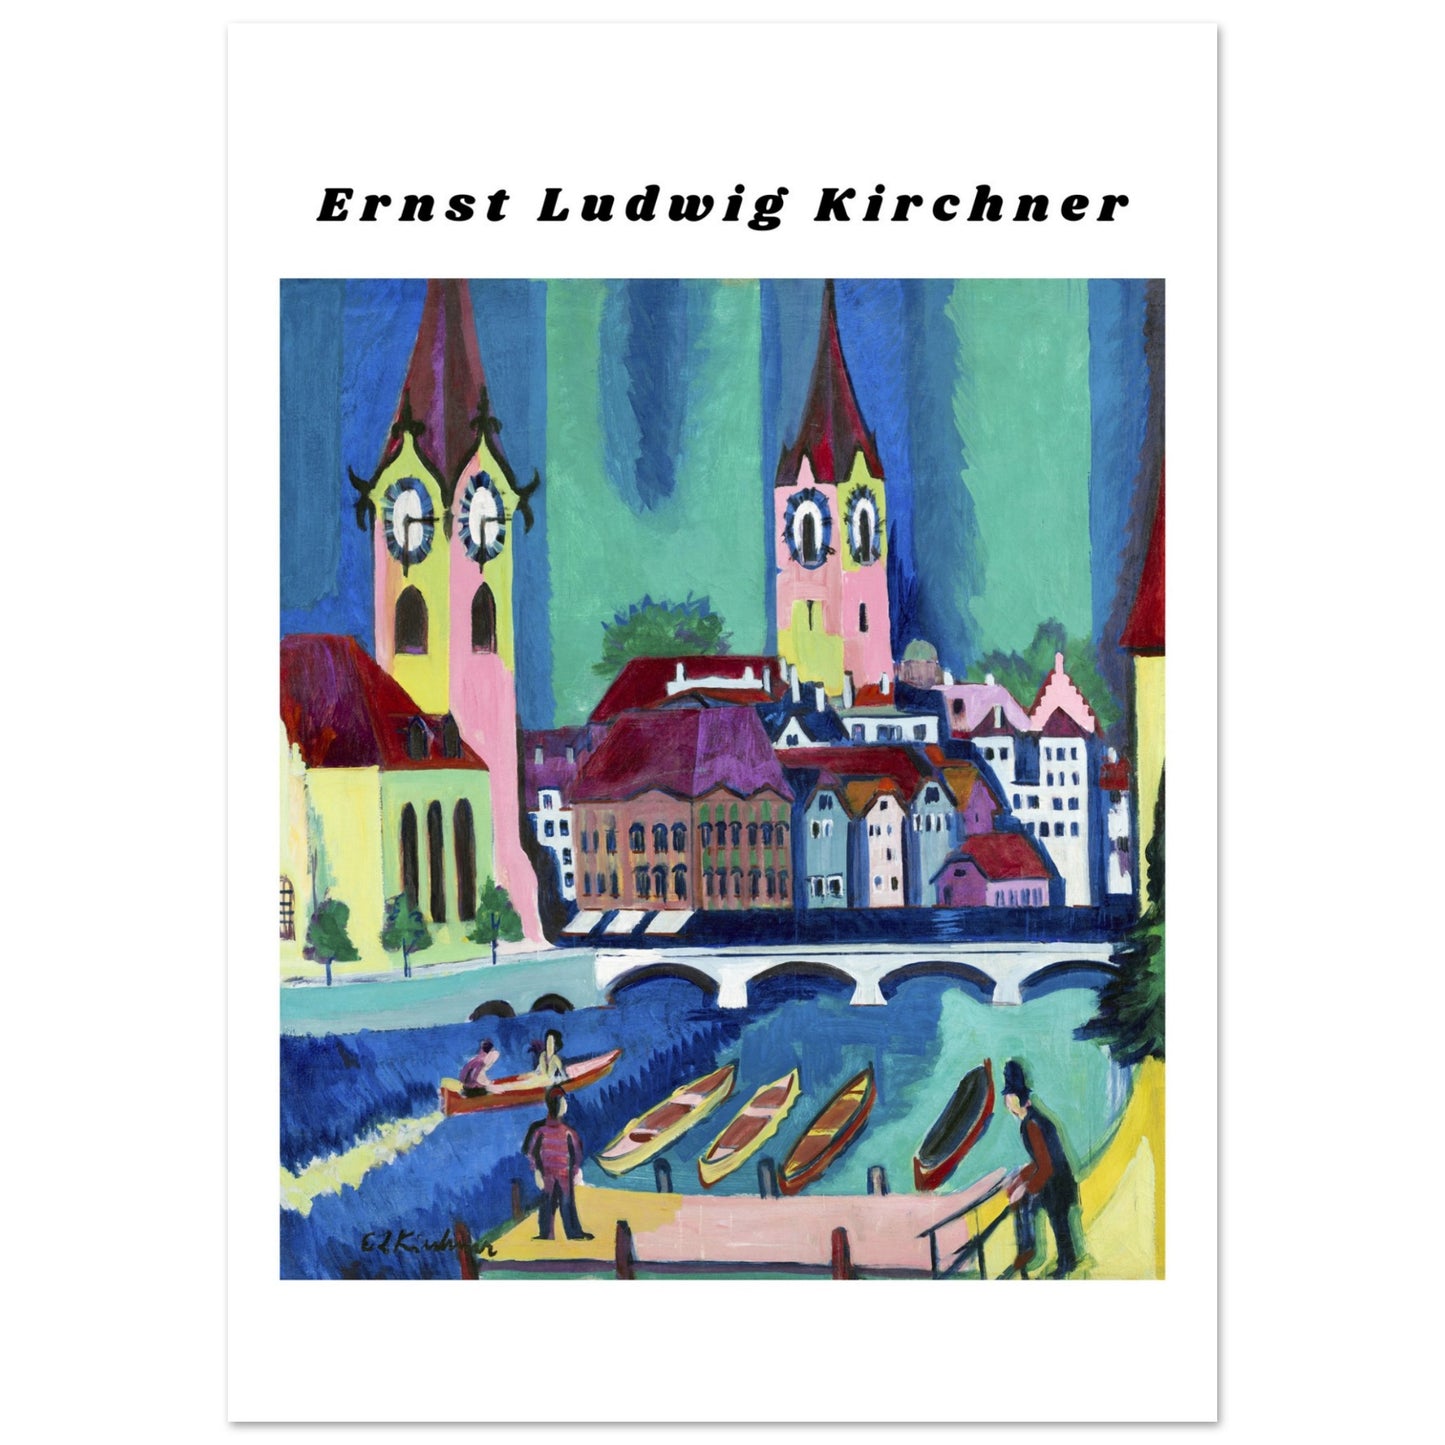 Poster - Ernst Ludwig Kirchner painting, vintage Zurich art print wall decoration